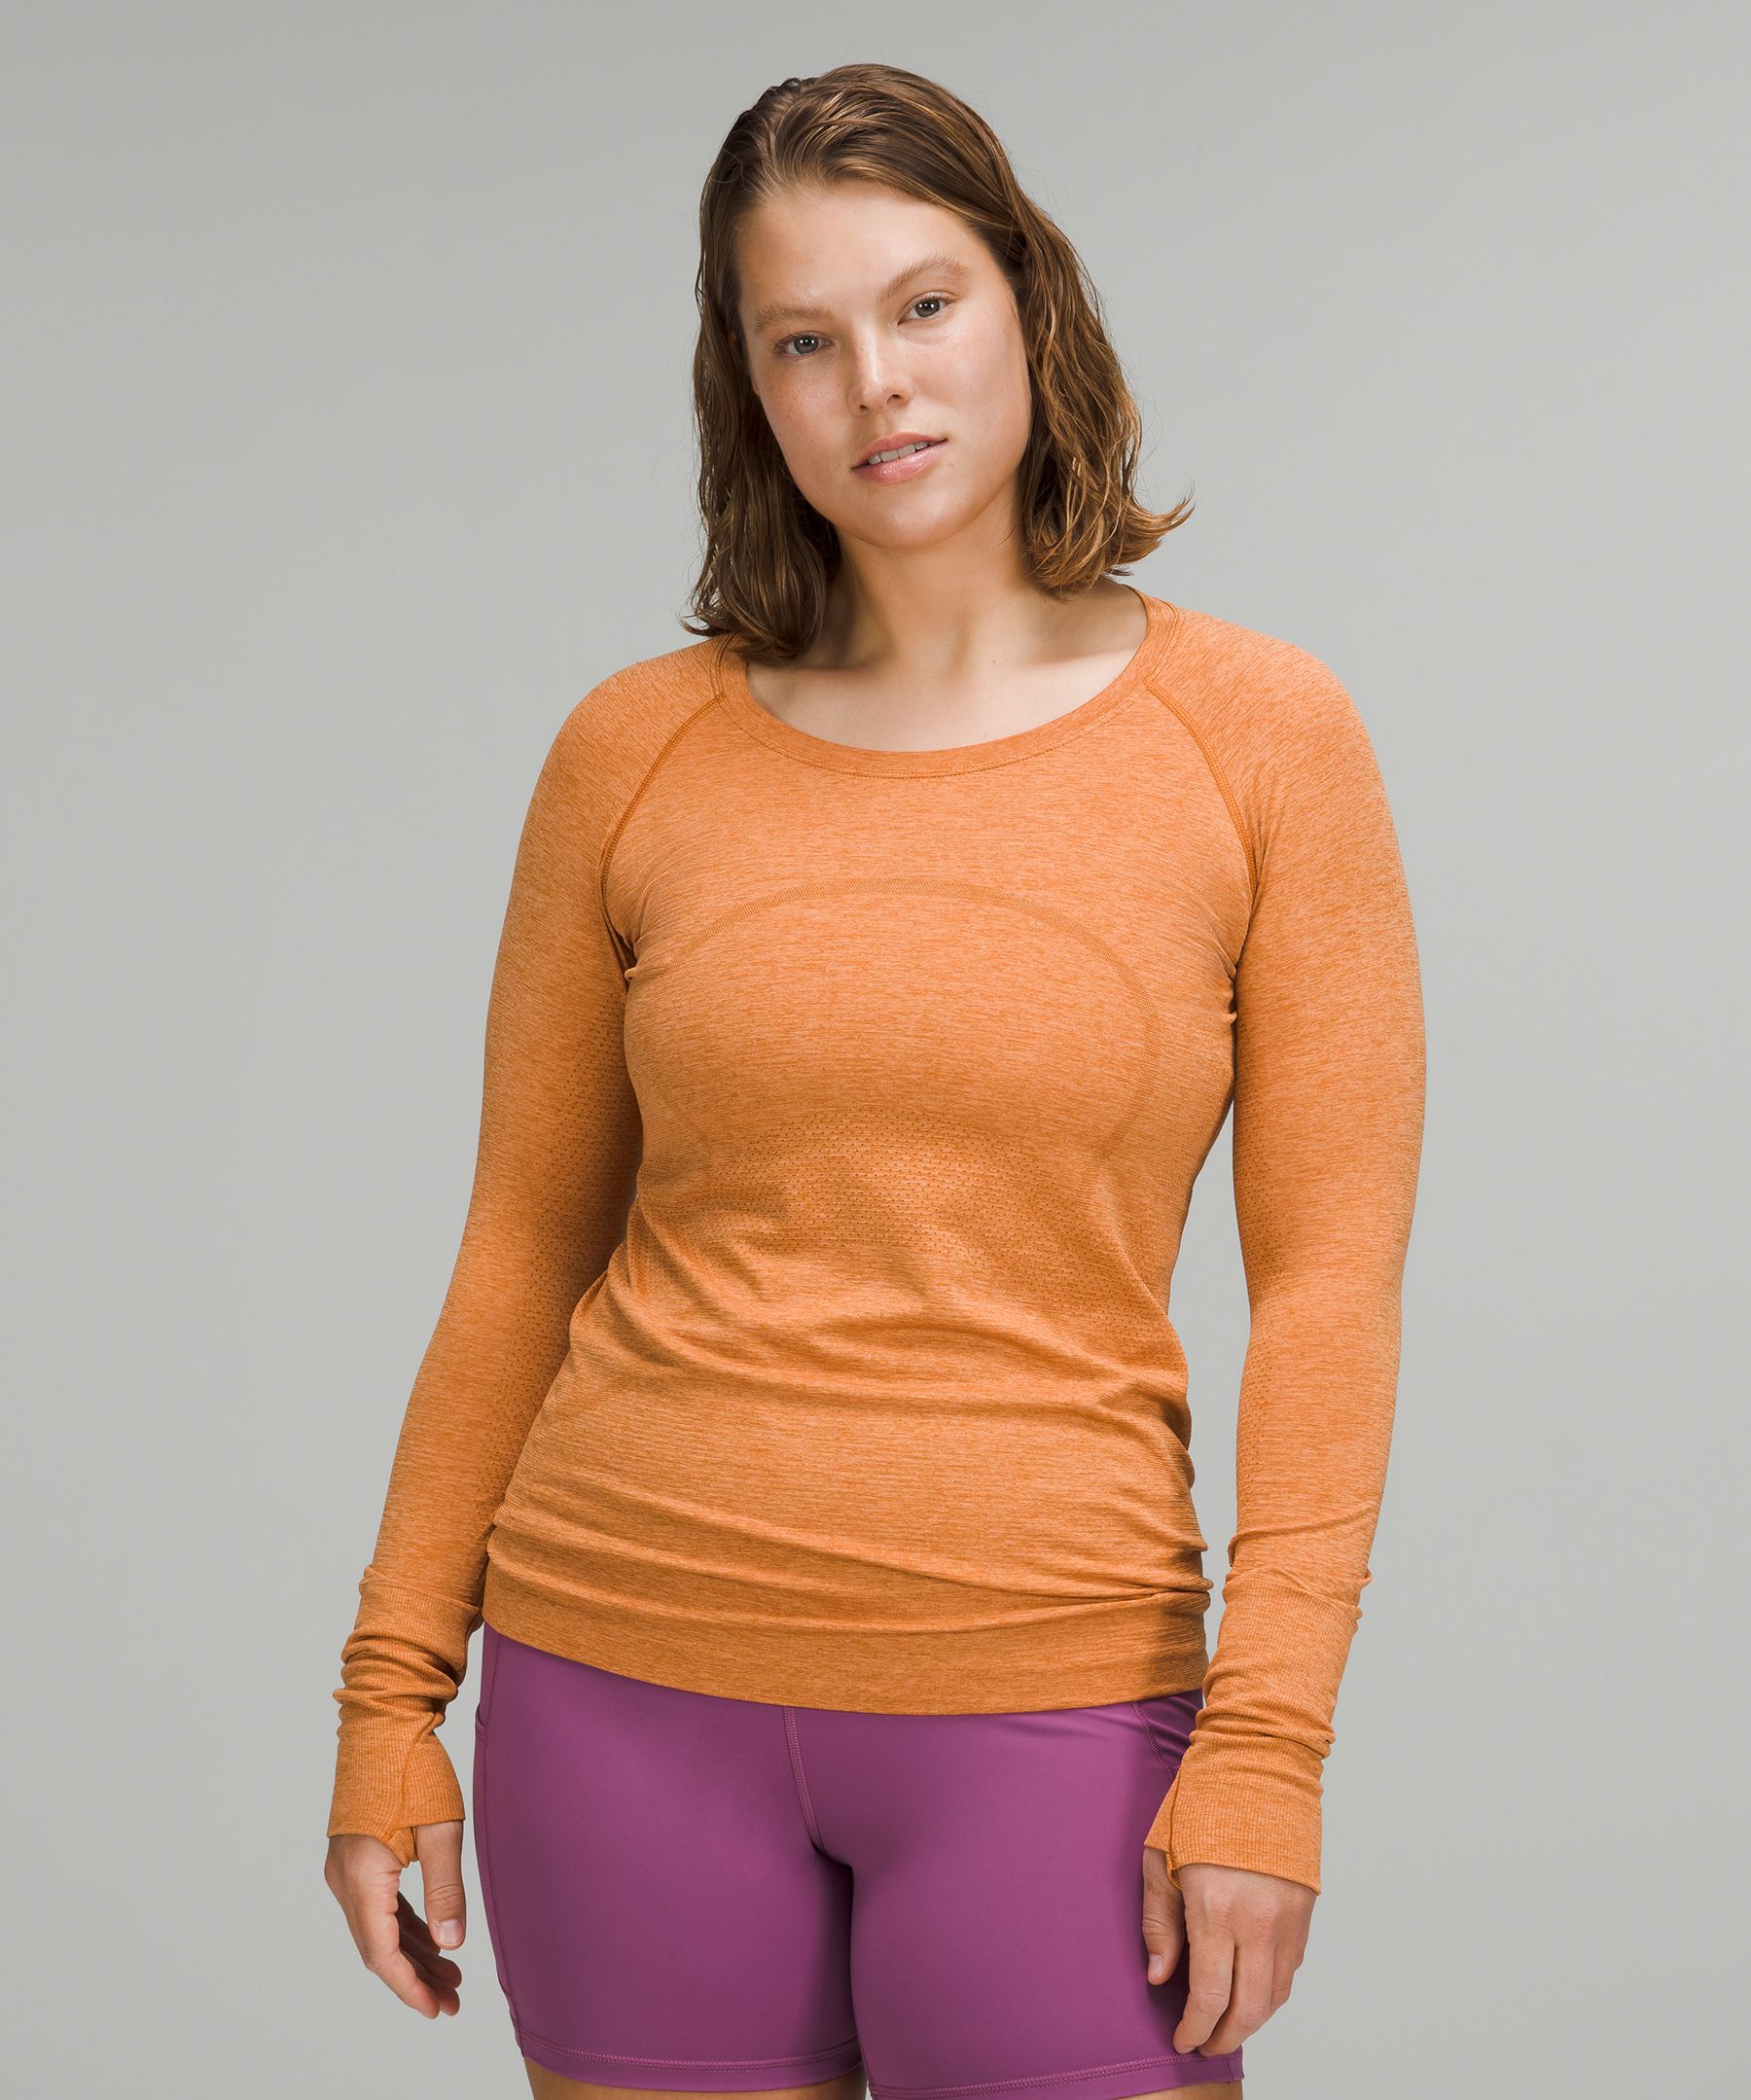 Lululemon Swiftly Tech Long Sleeve Shirt 2.0 In Butternut Brown/warm Apricot